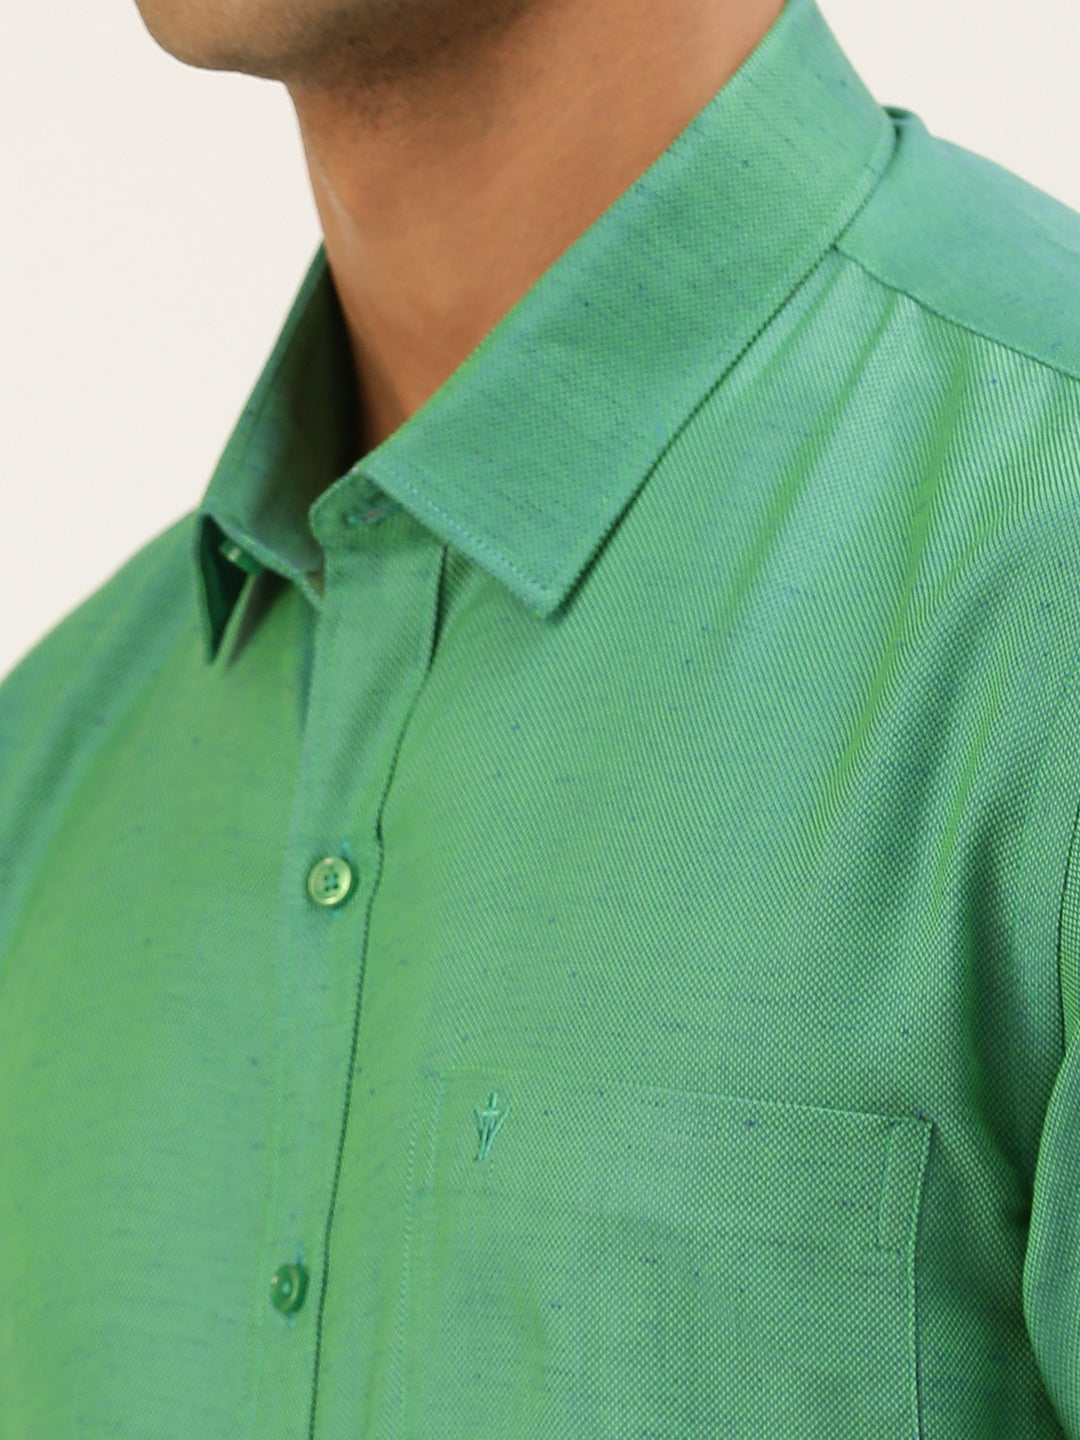 Mens Formal Shirt Half Sleeves Green CY10-Zoom view